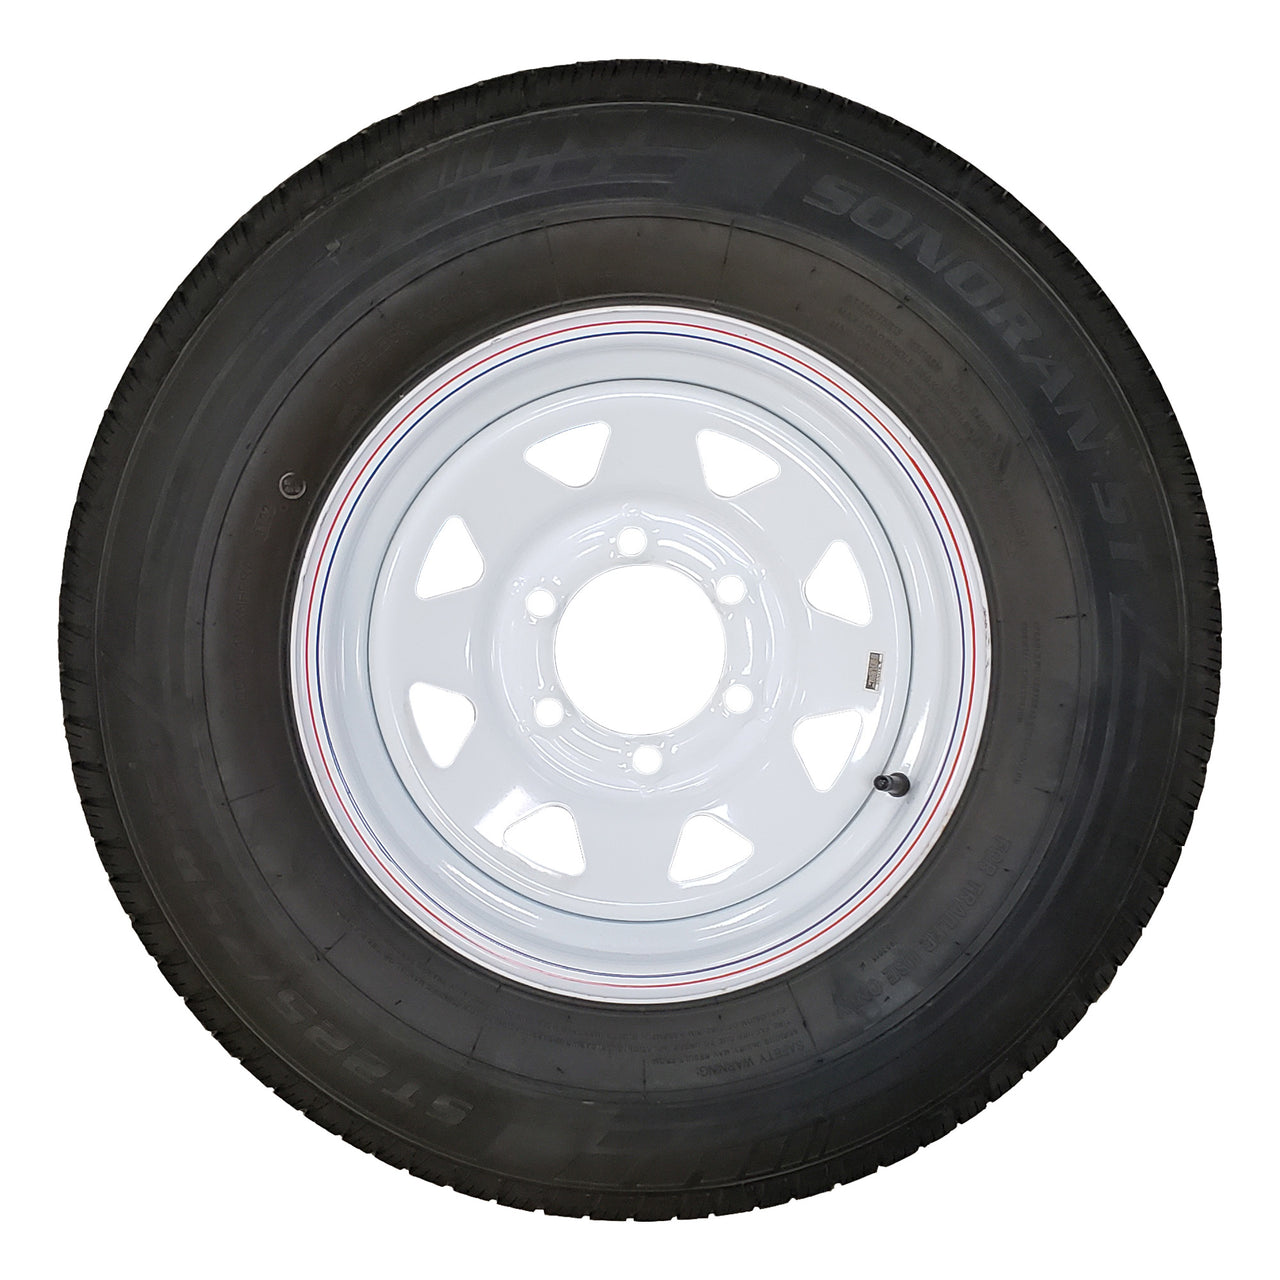 ST225/75R15 Trailer Tire w/ 15" White Wheel - 6 on 5-1/2"